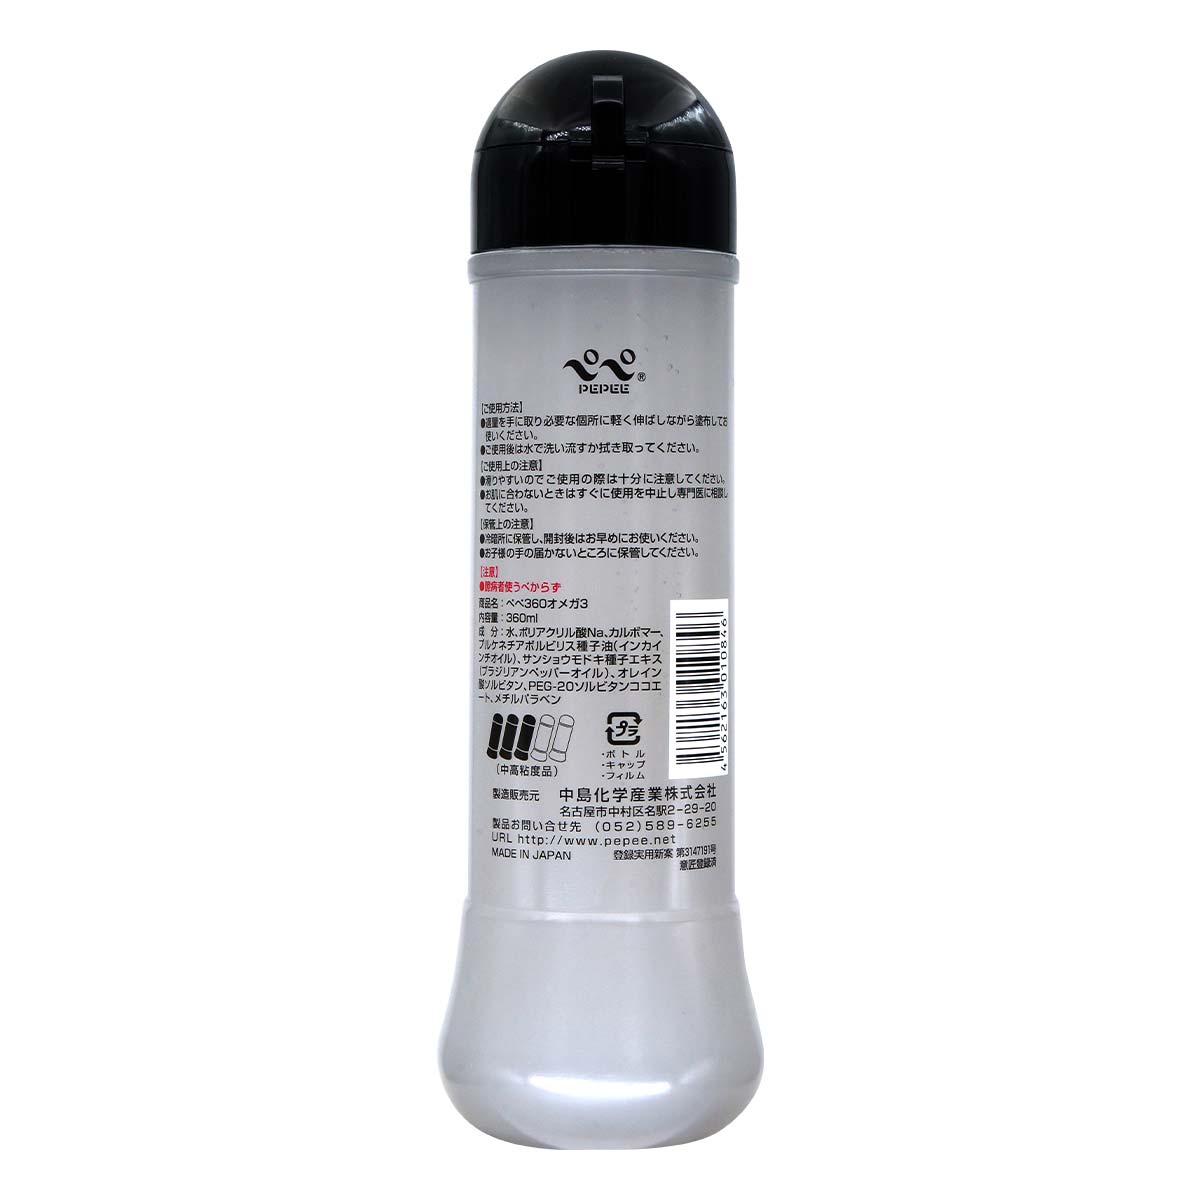 PEPEE 360 Omega 3 360ml water-based lubricant-thumb_3